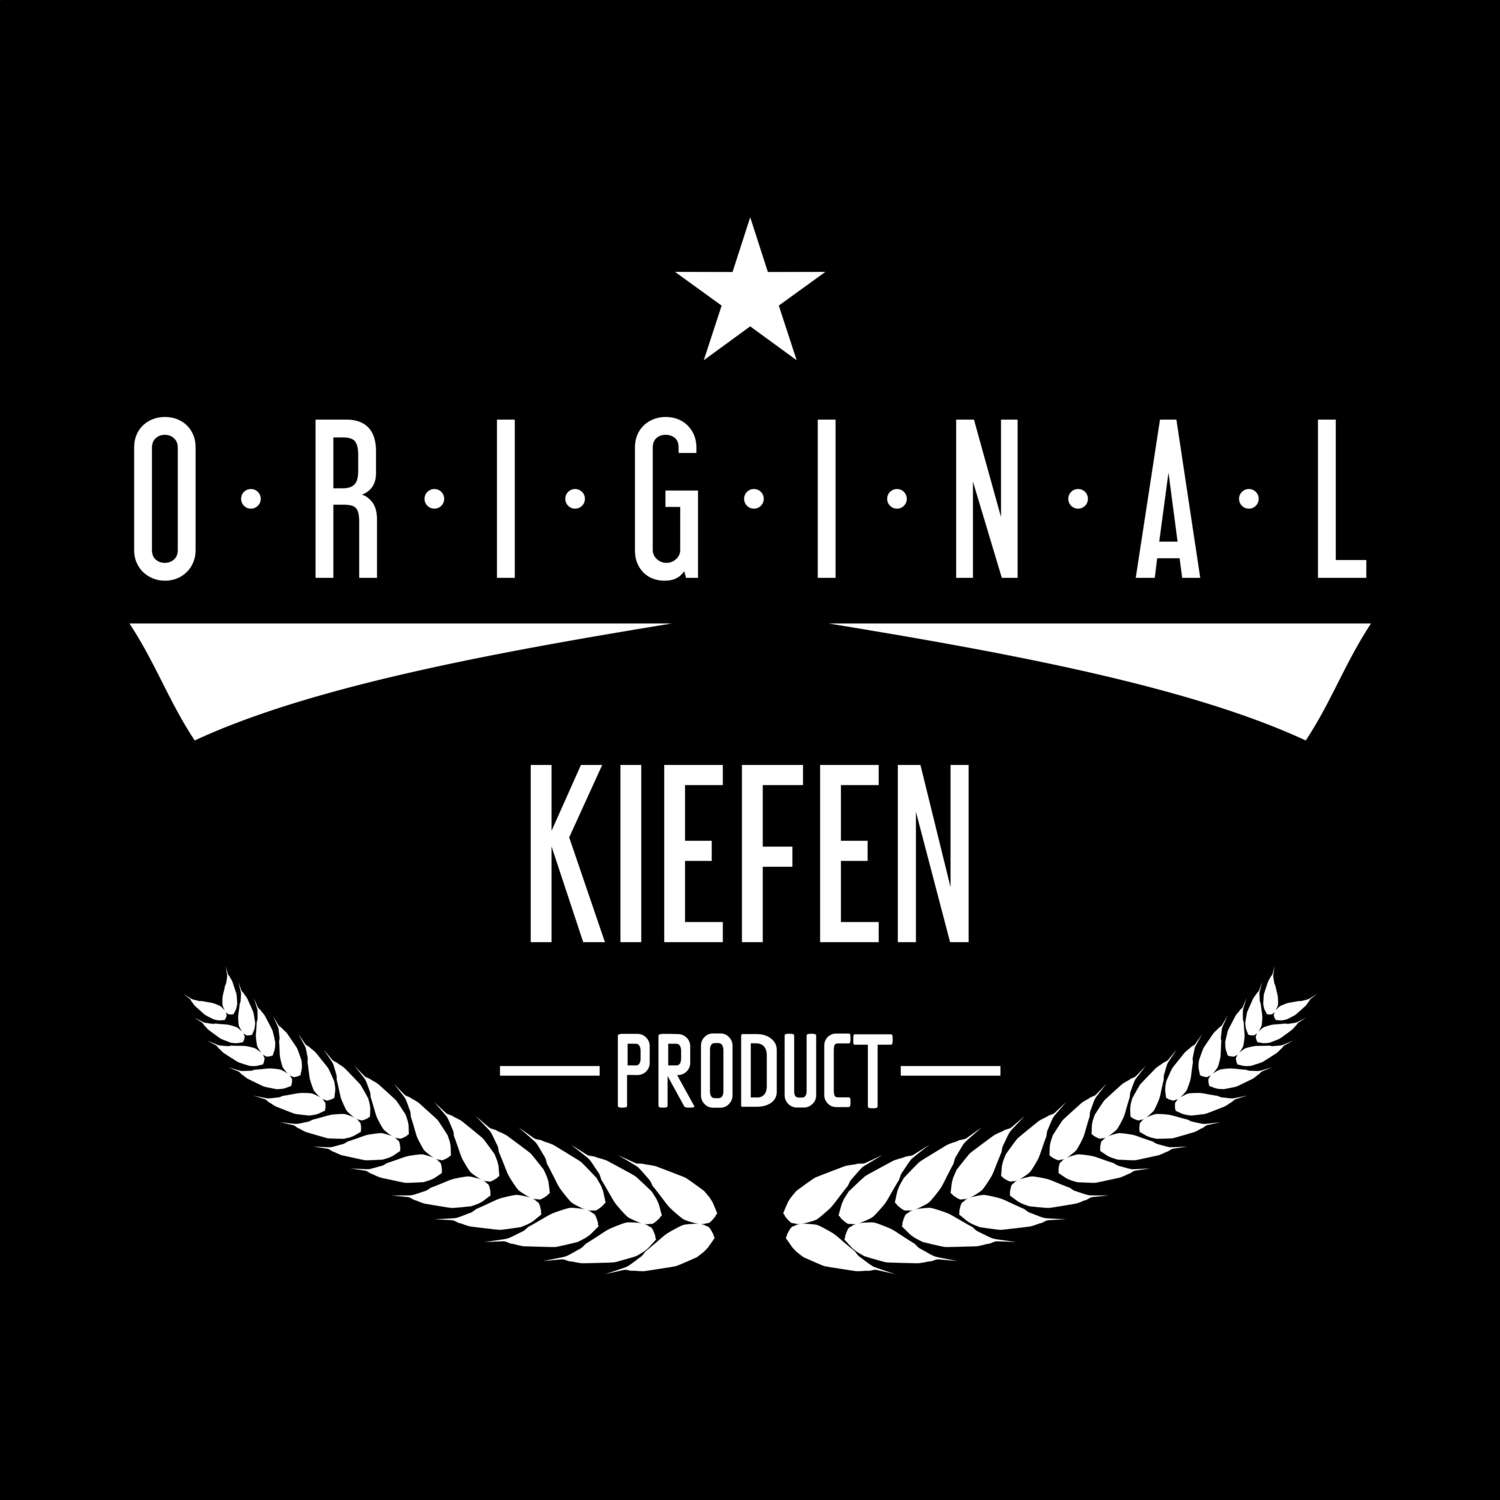 Kiefen T-Shirt »Original Product«